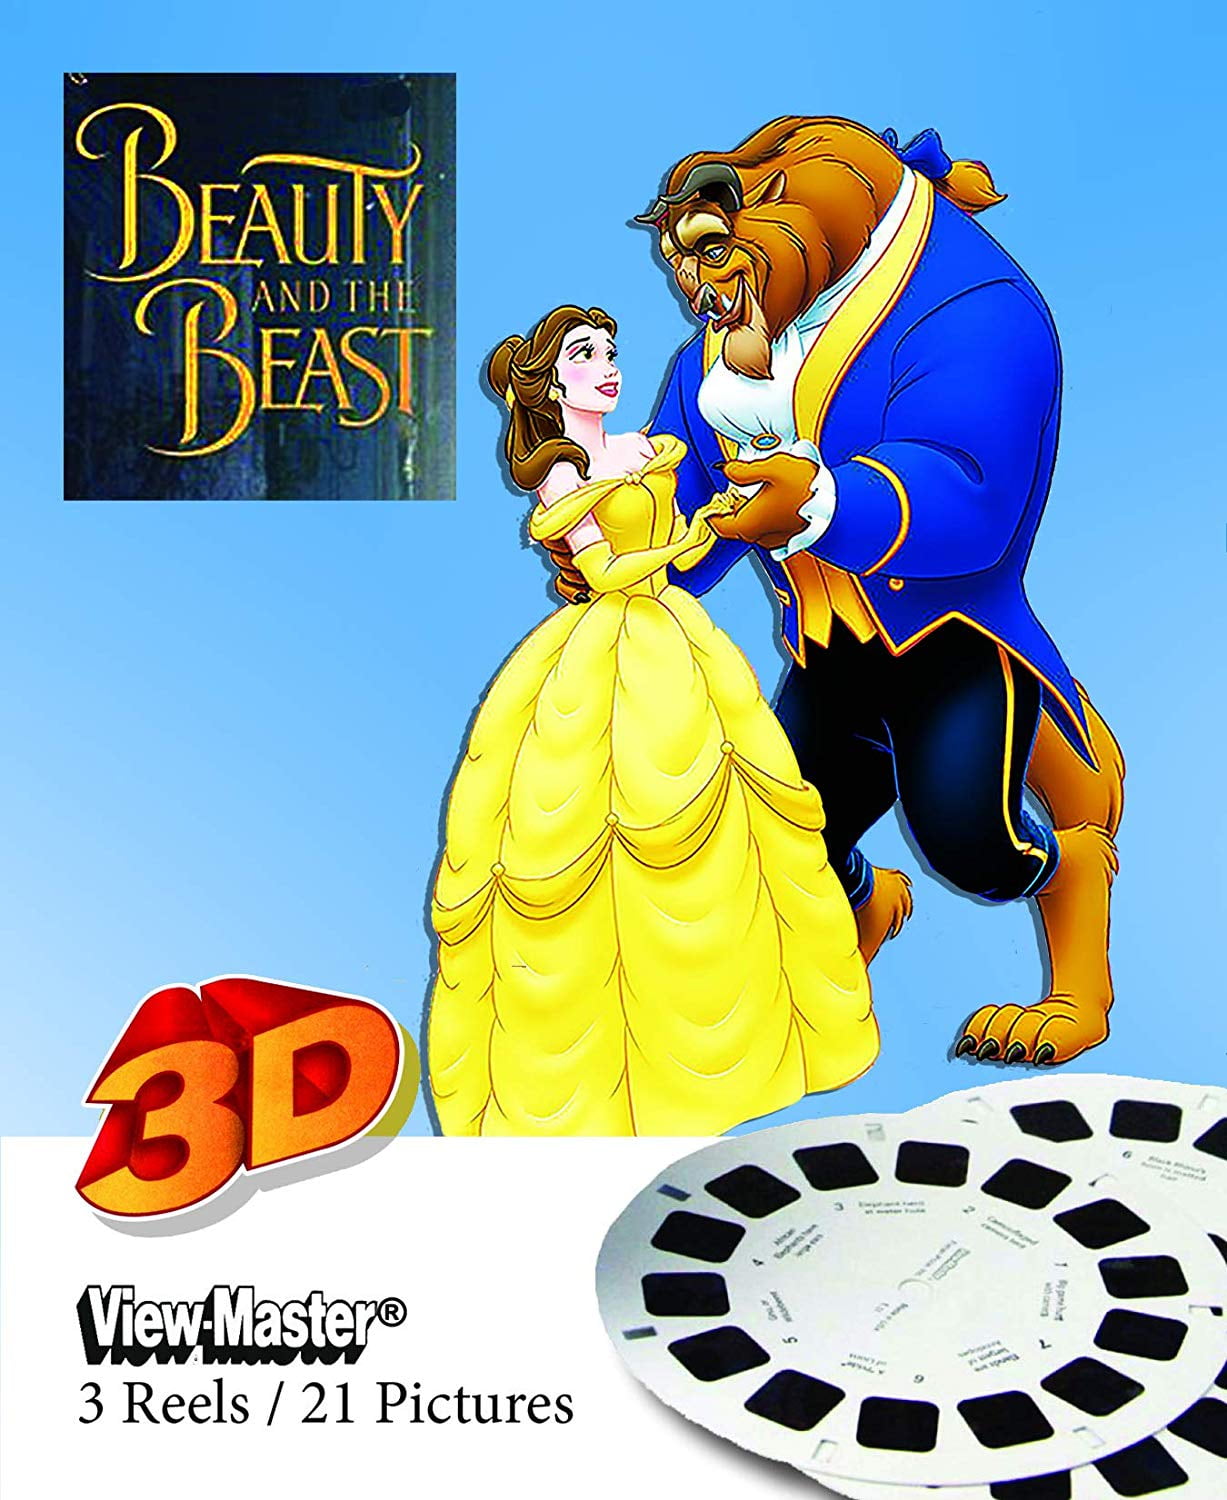 Tangled - Disney Movie - ViewMaster 3 Reels on Card